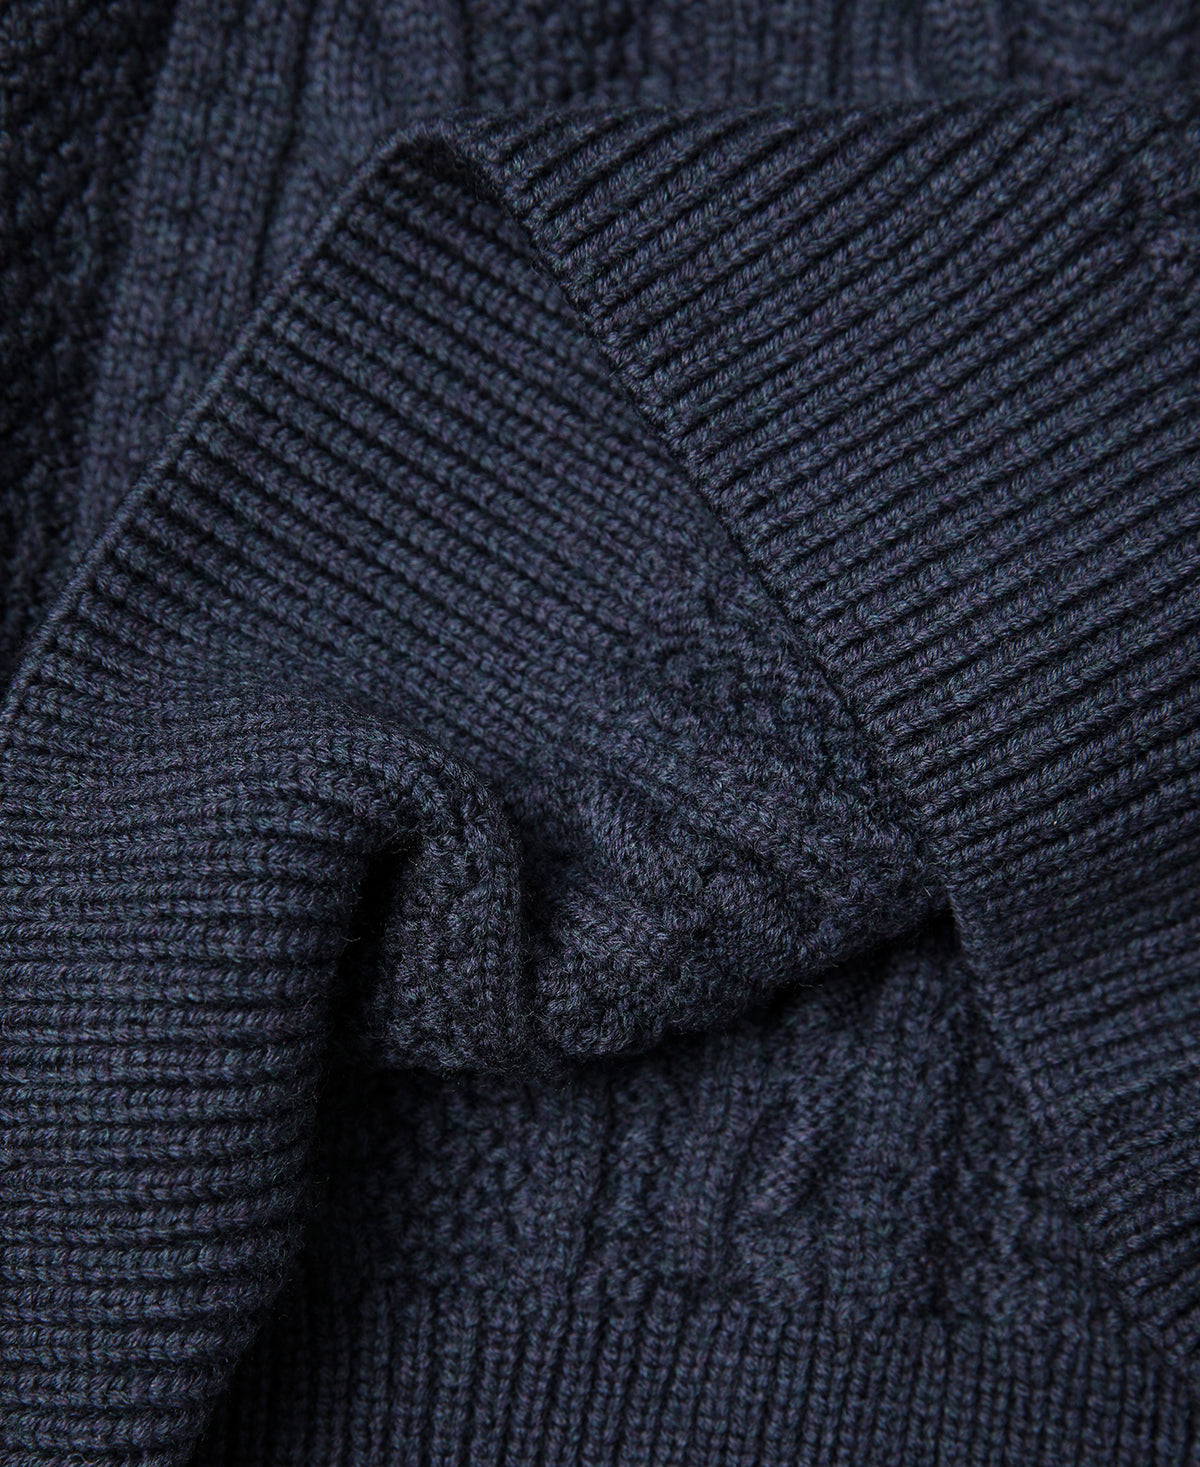 Merino Wool Aran Sweater - Navy